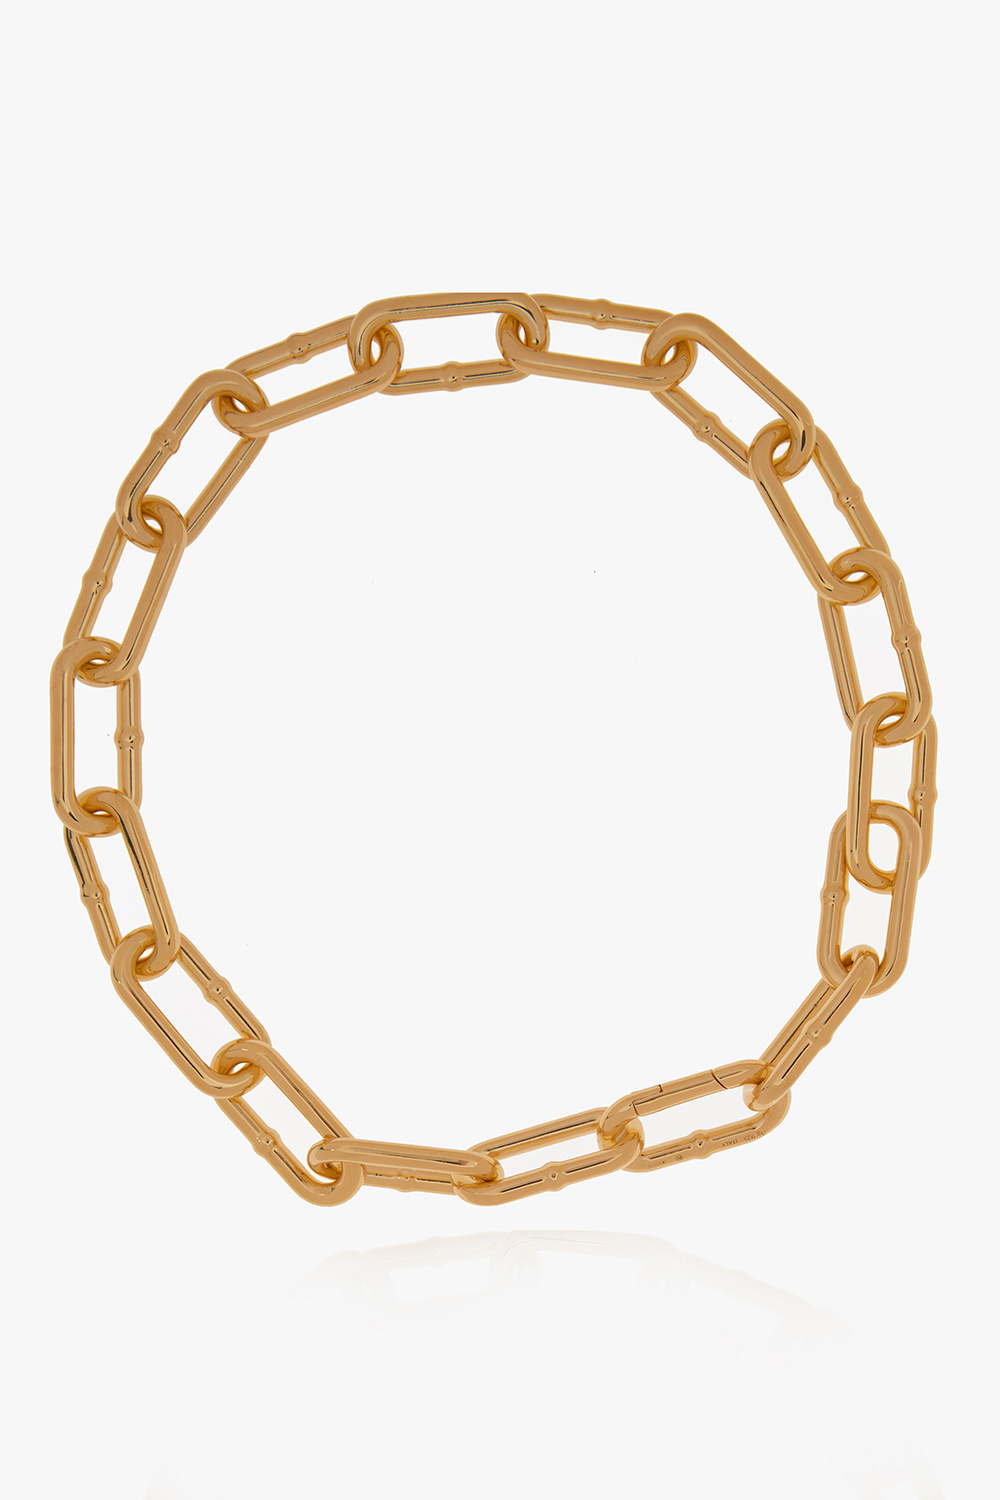 bottega cardholder Veneta Gold-plated necklace